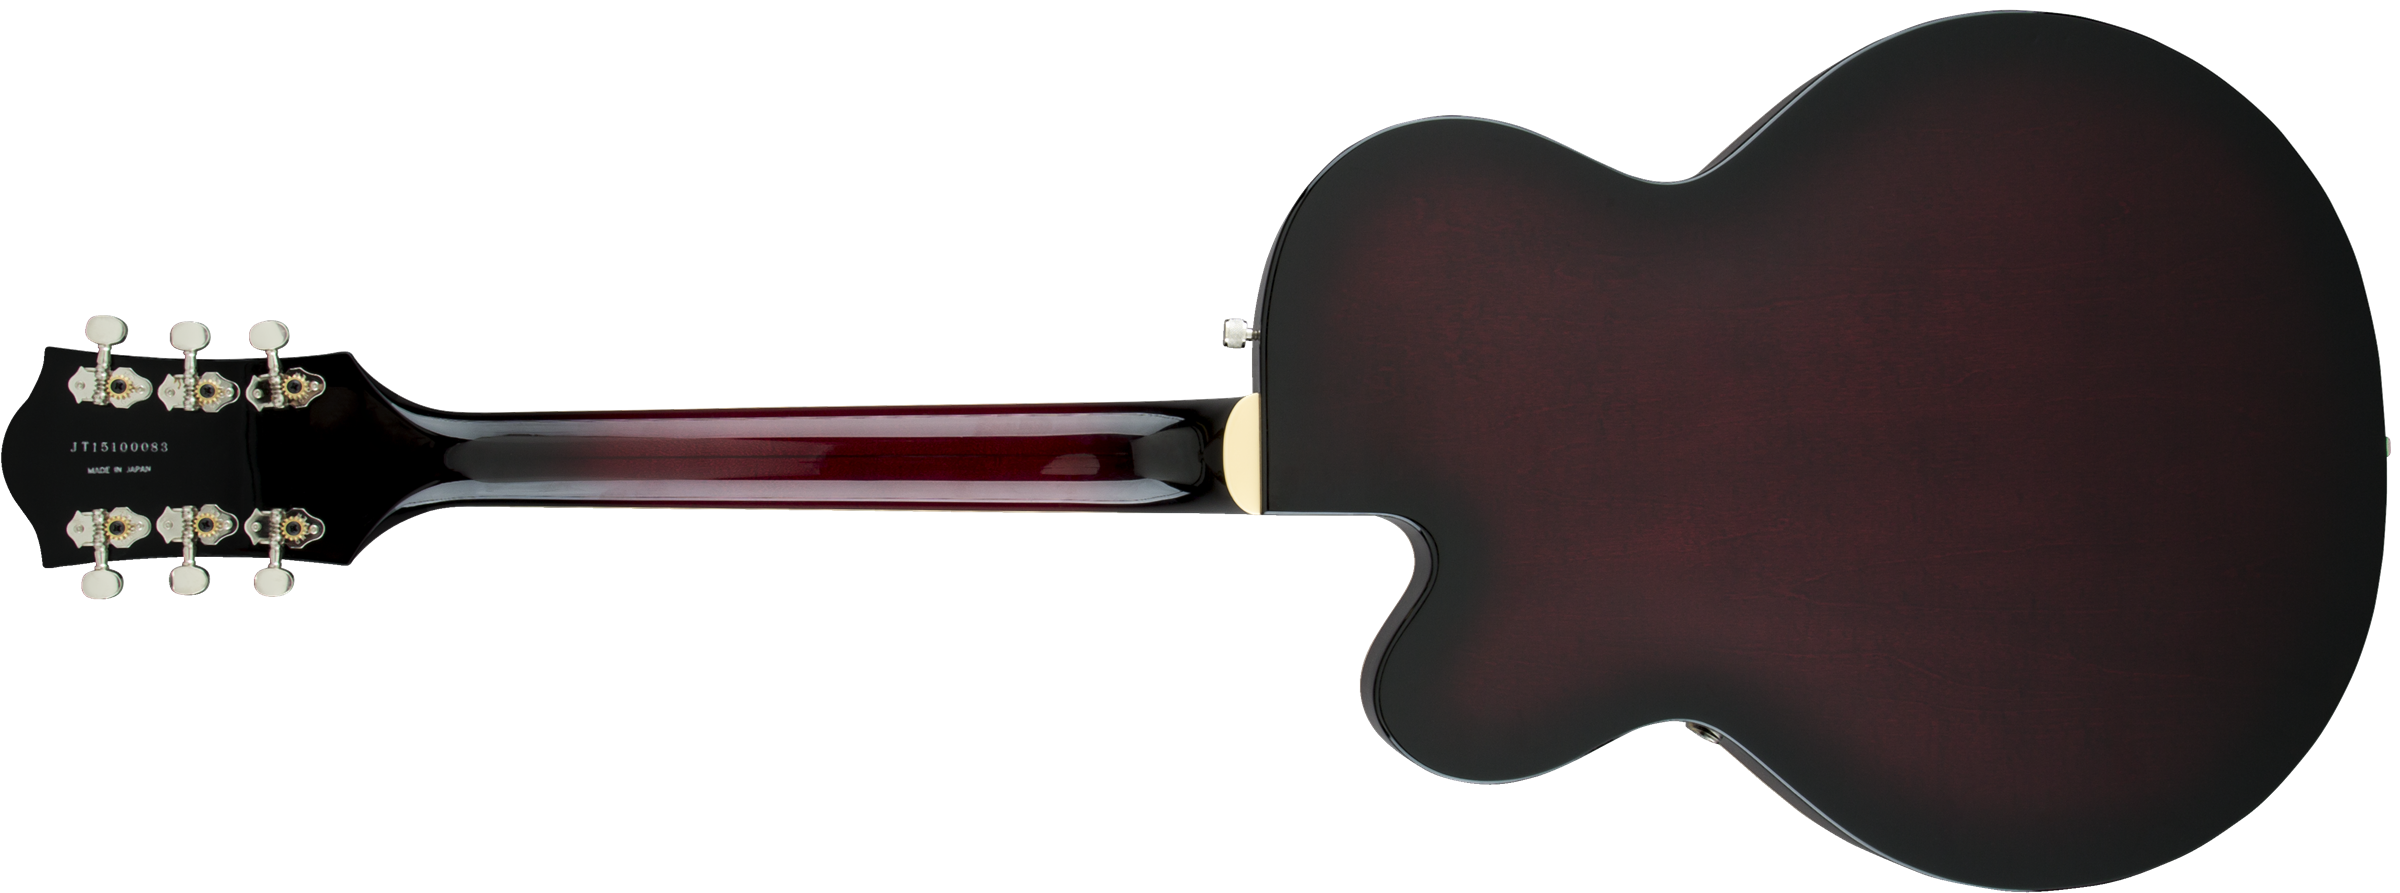 Gretsch G6119t-62vs Chet Atkins Tennessee Rose 2h Trem Rw - Dark Cherry Stain - Semi-hollow electric guitar - Variation 1